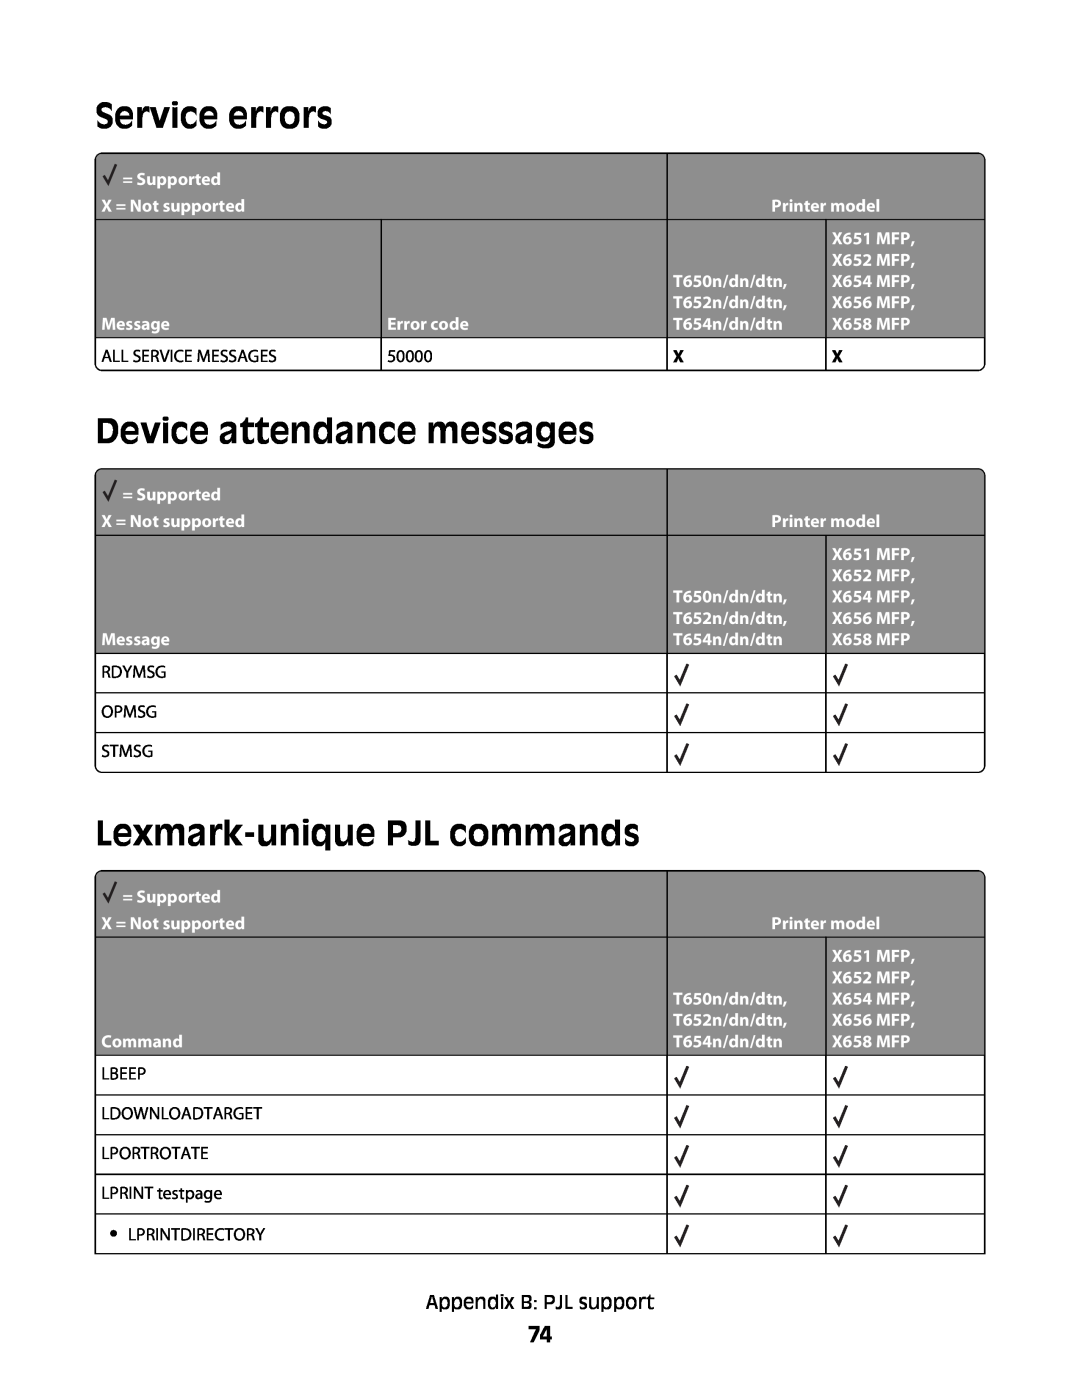 Lexmark X656 MFP, X652 MFP Service errors, Device attendance messages, Lexmark-unique PJL commands, Appendix B PJL support 